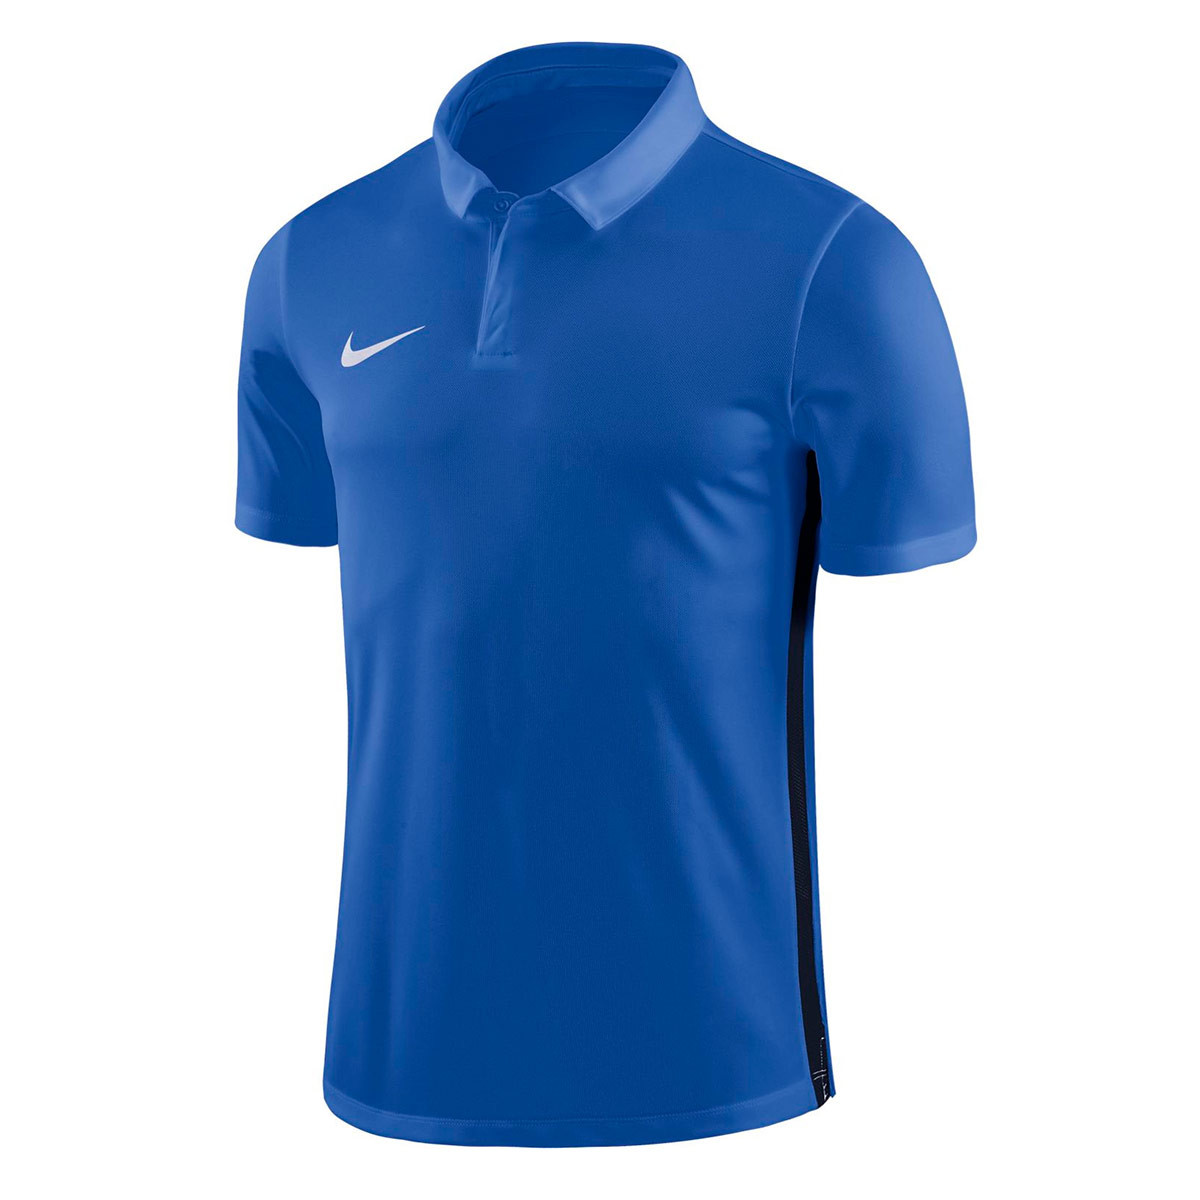 Polo Nike Academy 18 m/c Royal blue-Obsidian-White - Negozio di calcio  Fútbol Emotion